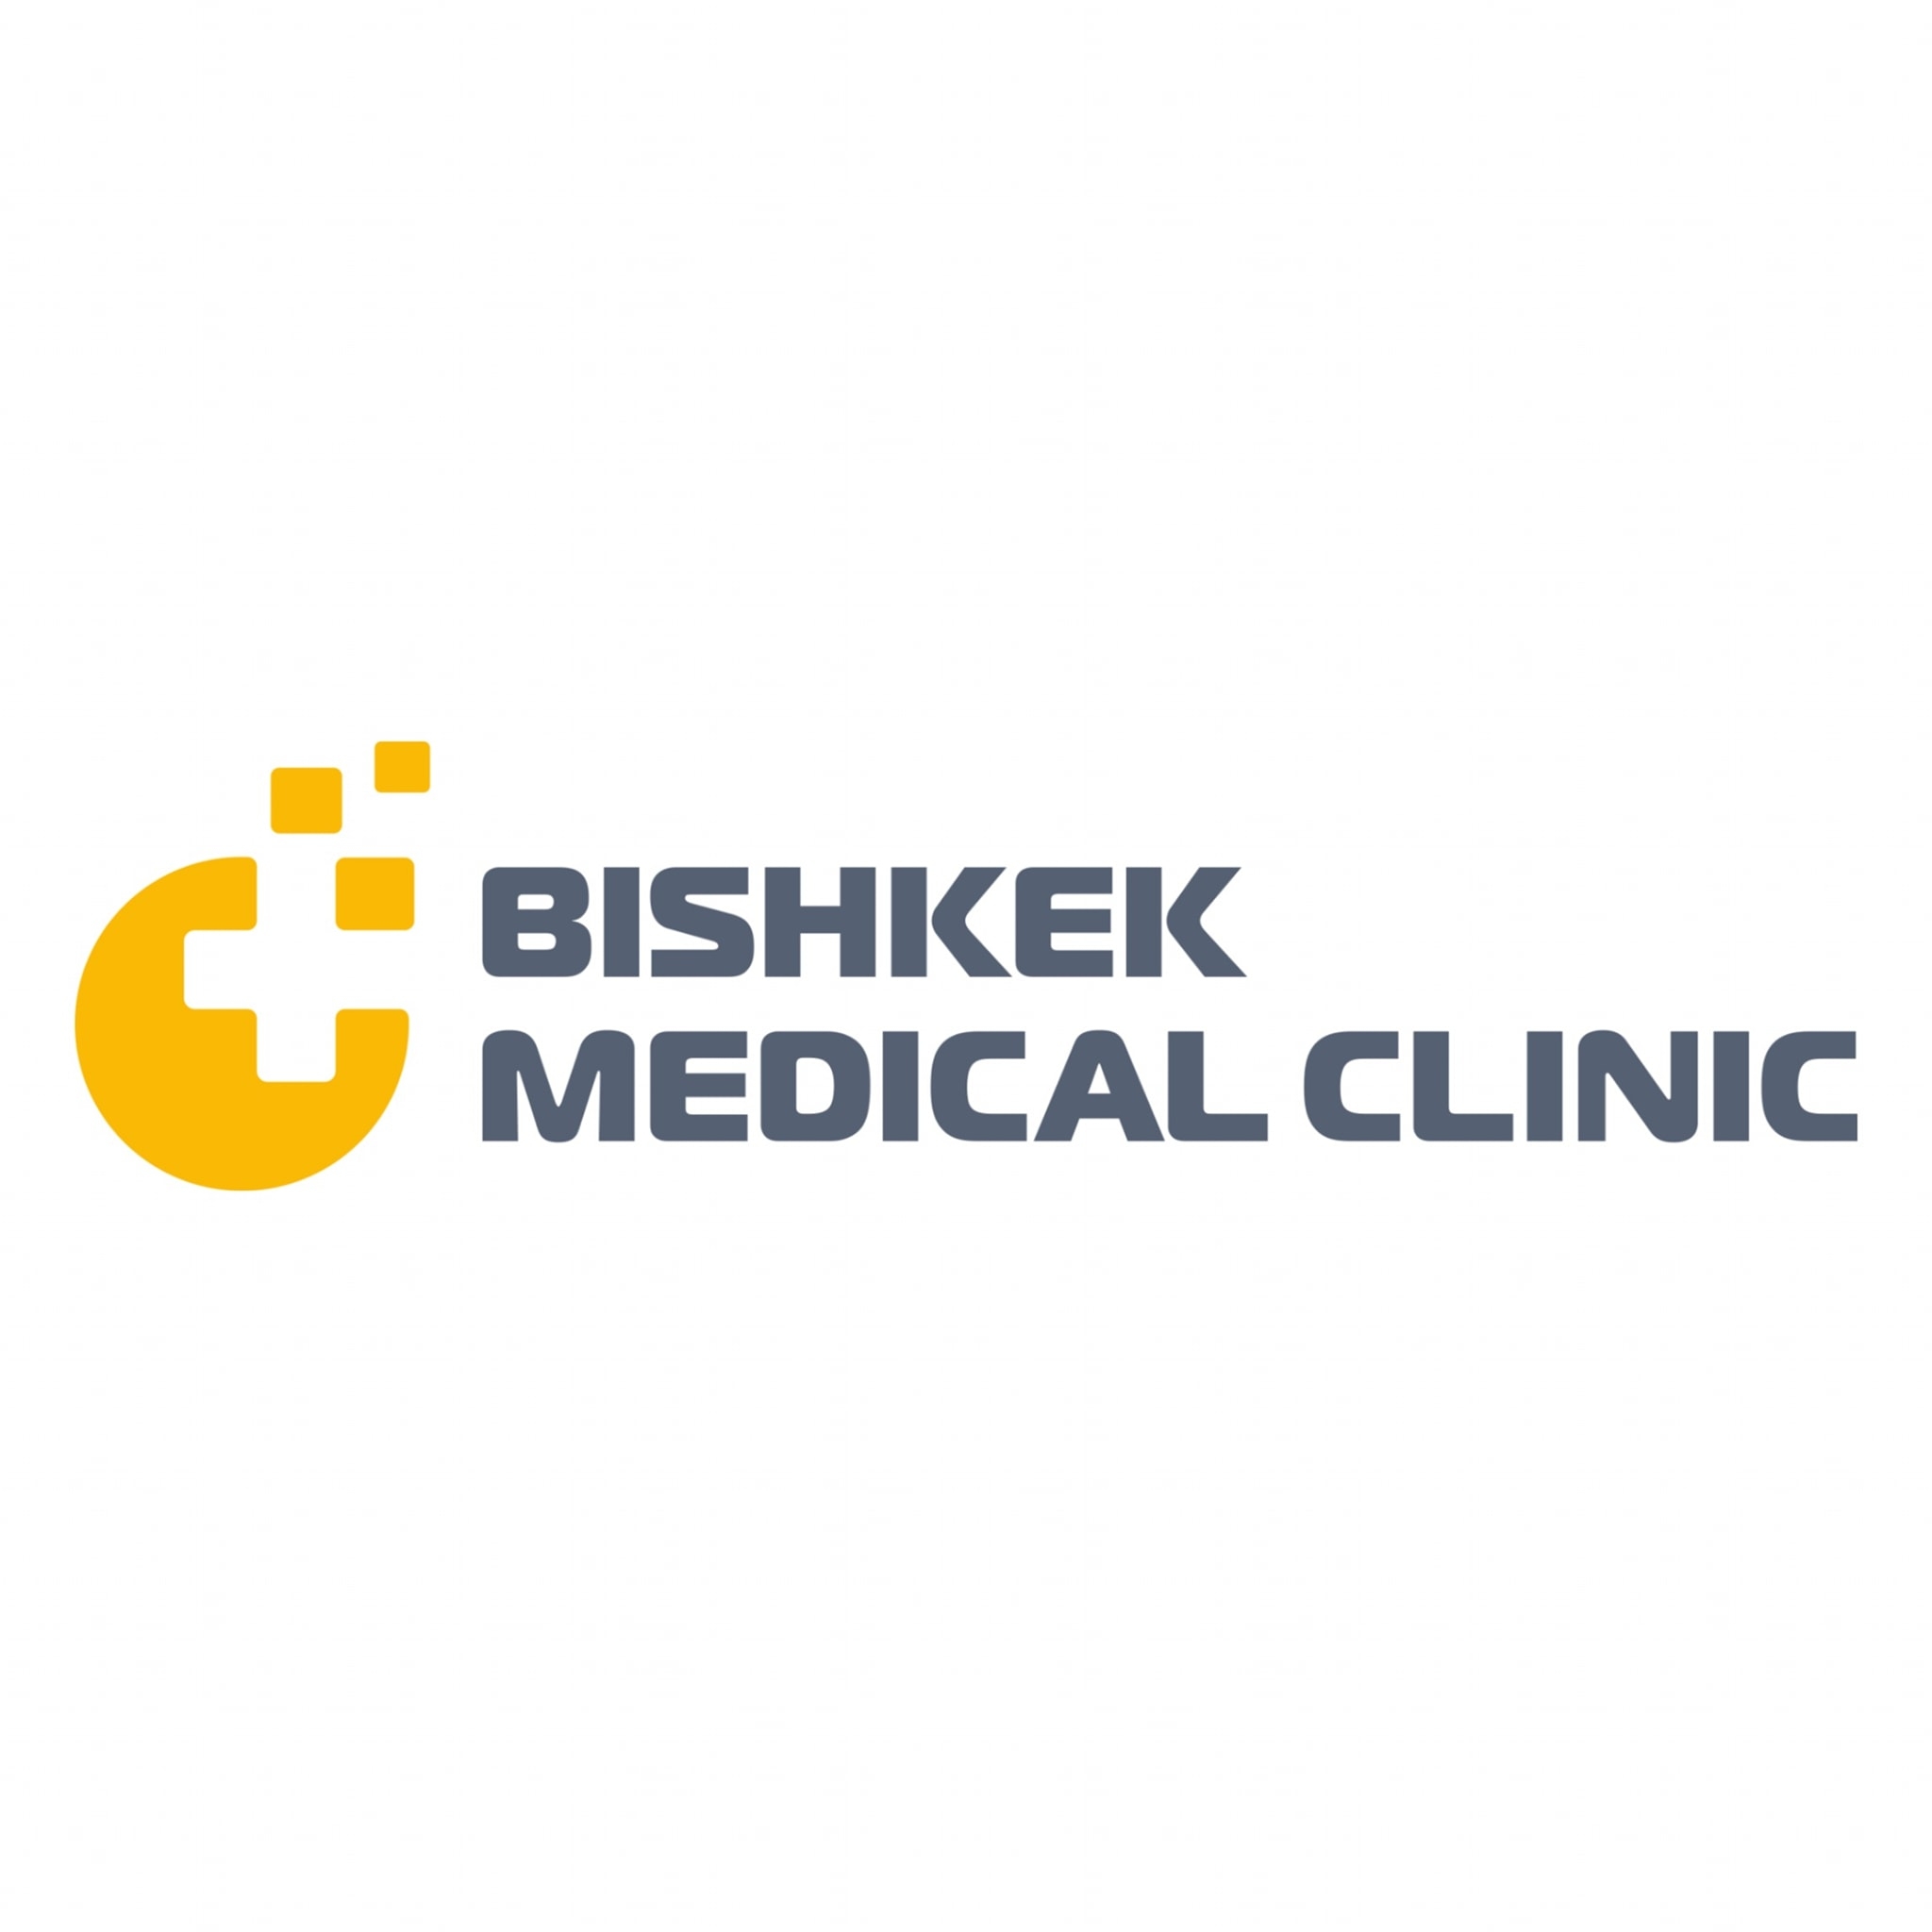 bishkek medical clinic - medik.kg